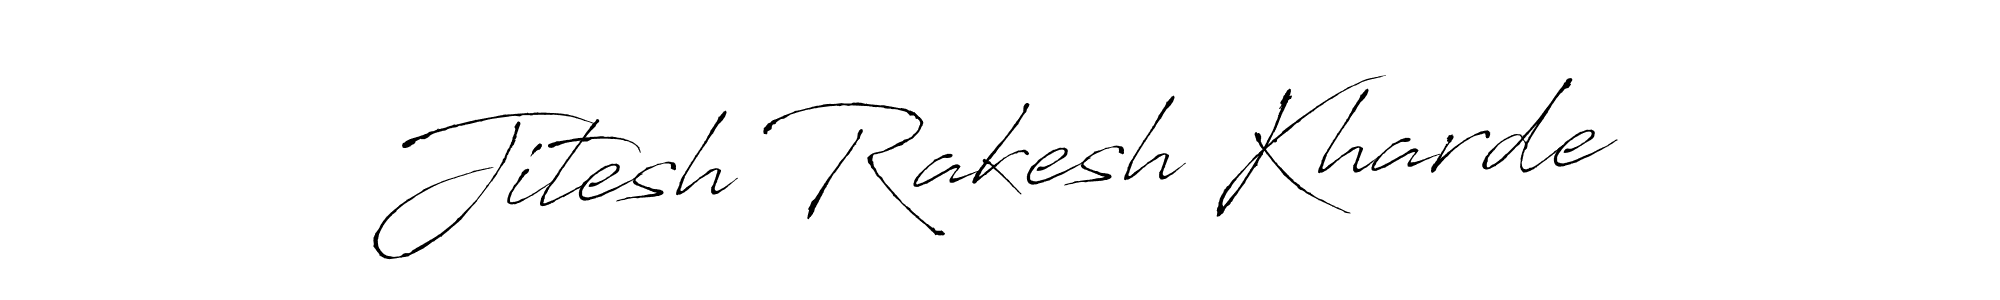 How to Draw Jitesh Rakesh Kharde signature style? Antro_Vectra is a latest design signature styles for name Jitesh Rakesh Kharde. Jitesh Rakesh Kharde signature style 6 images and pictures png